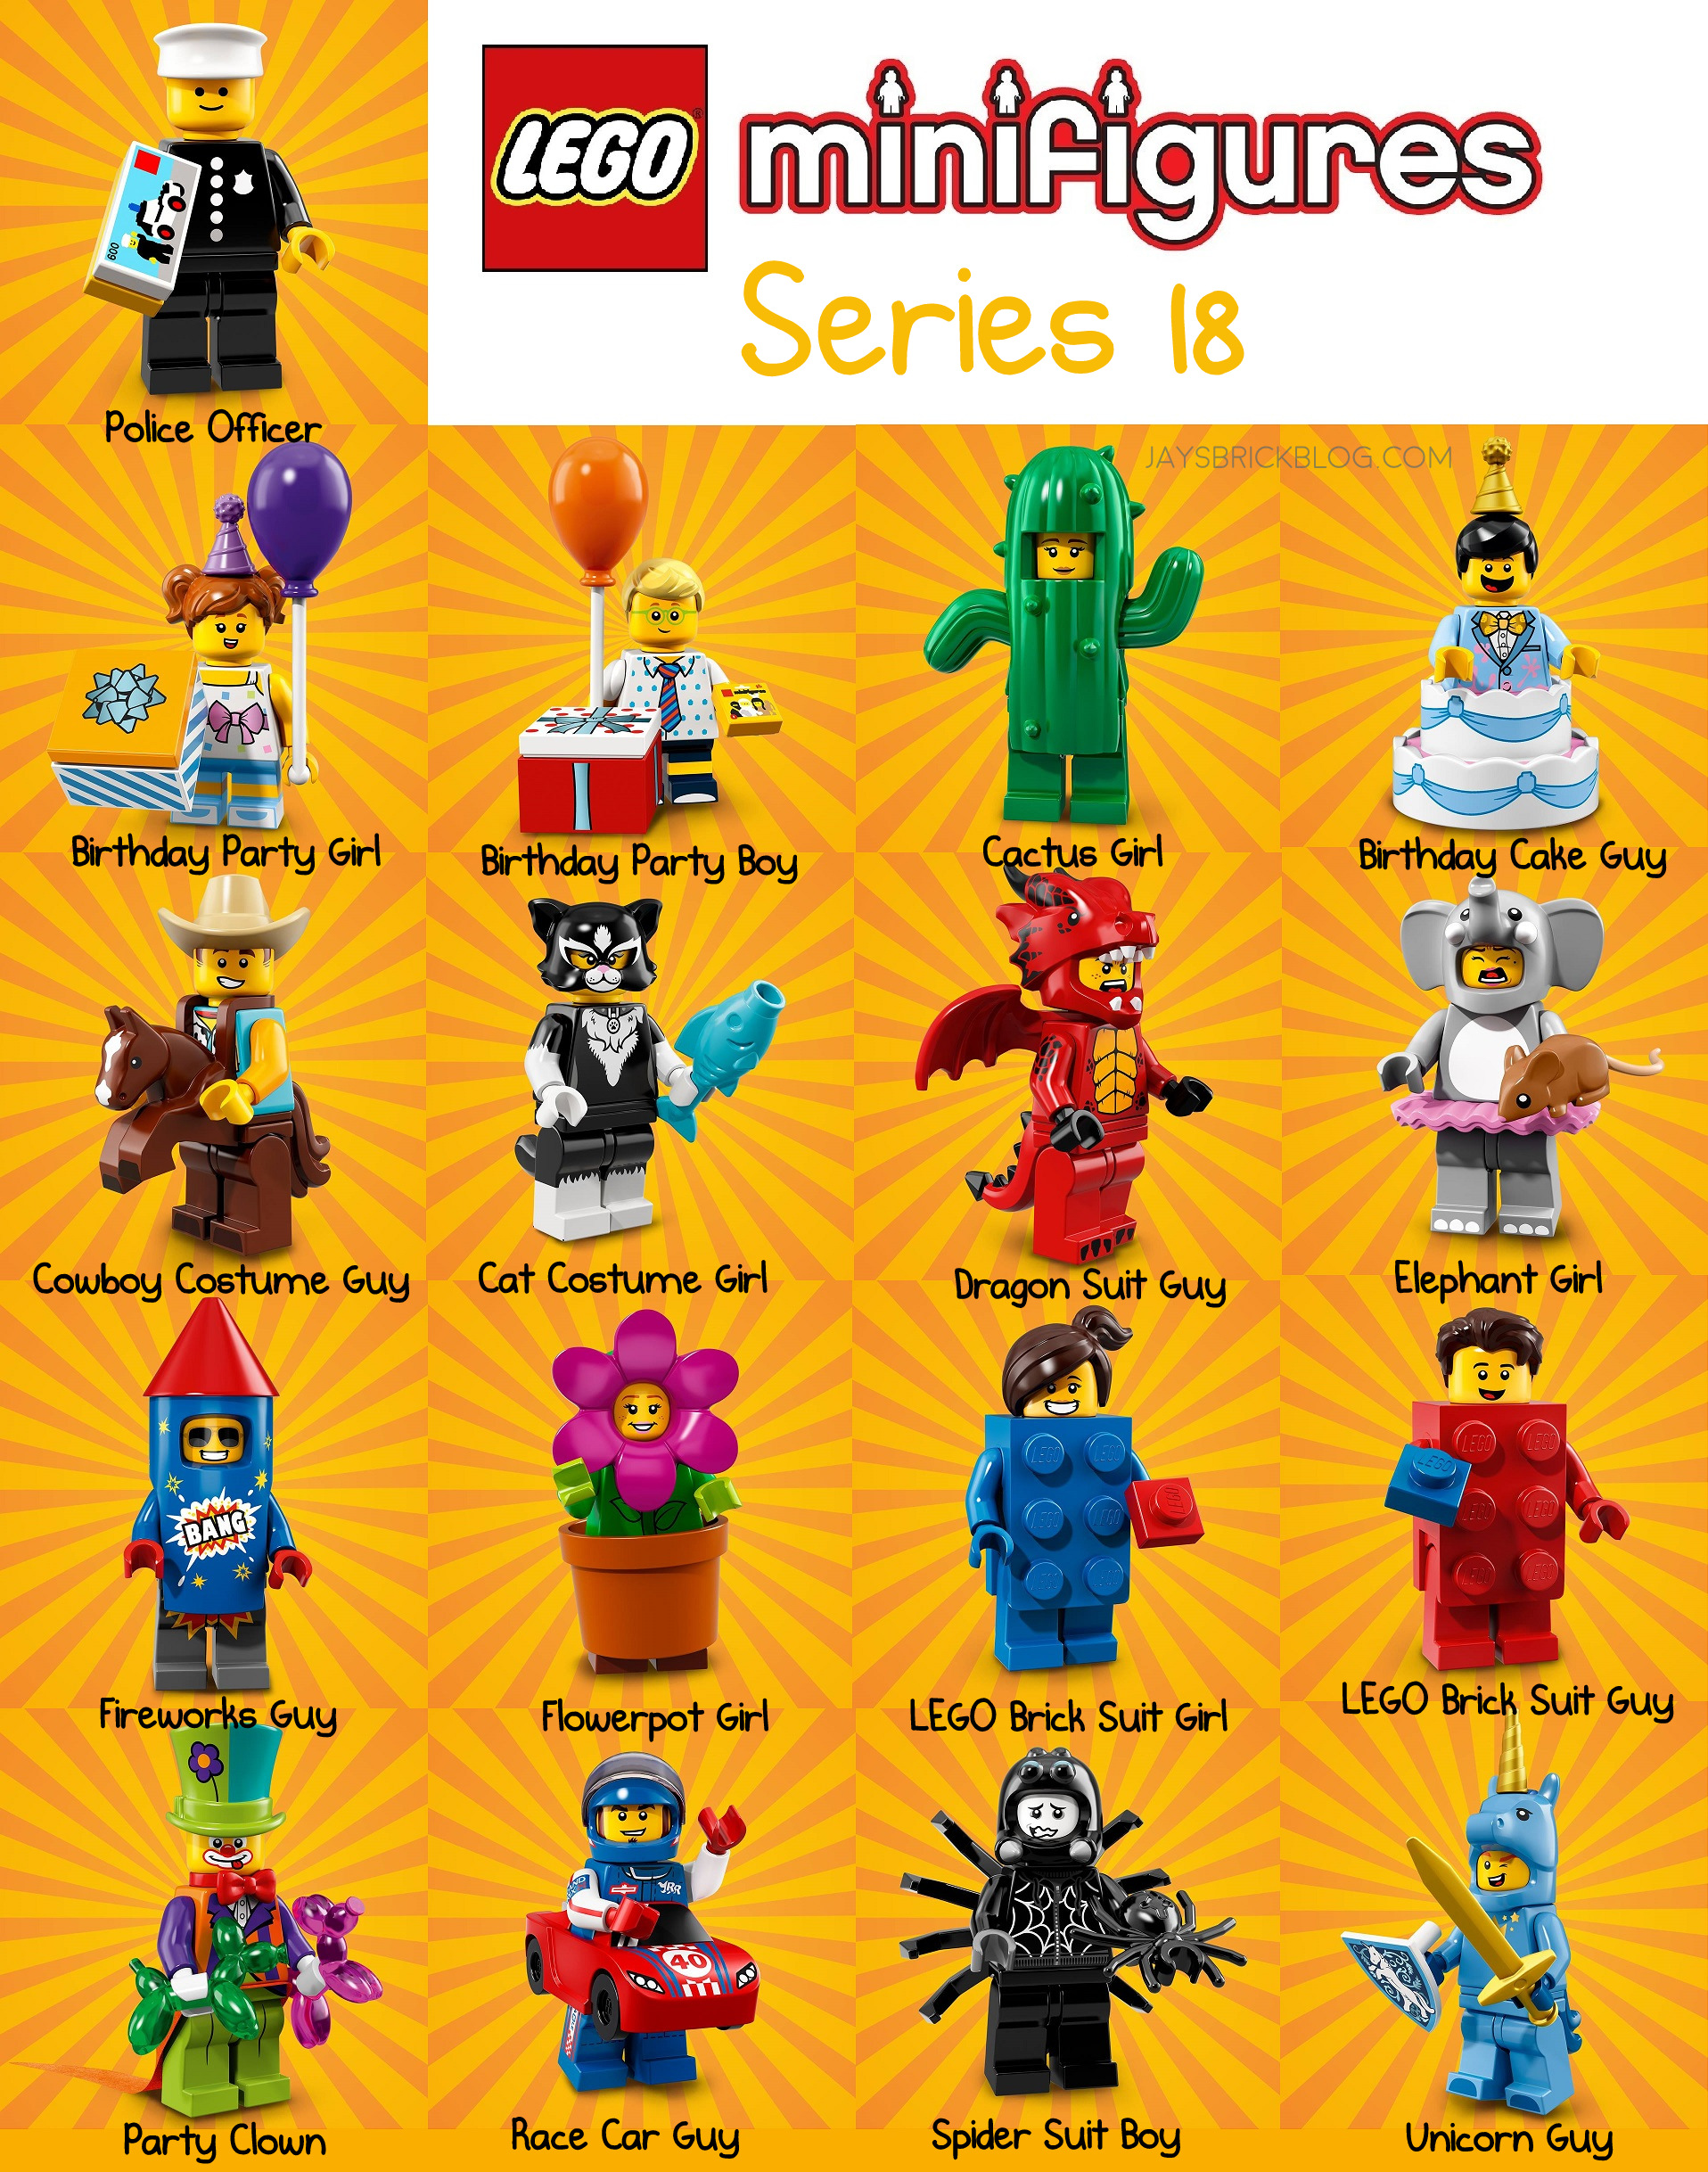 LEGO Minifigures Series 18 